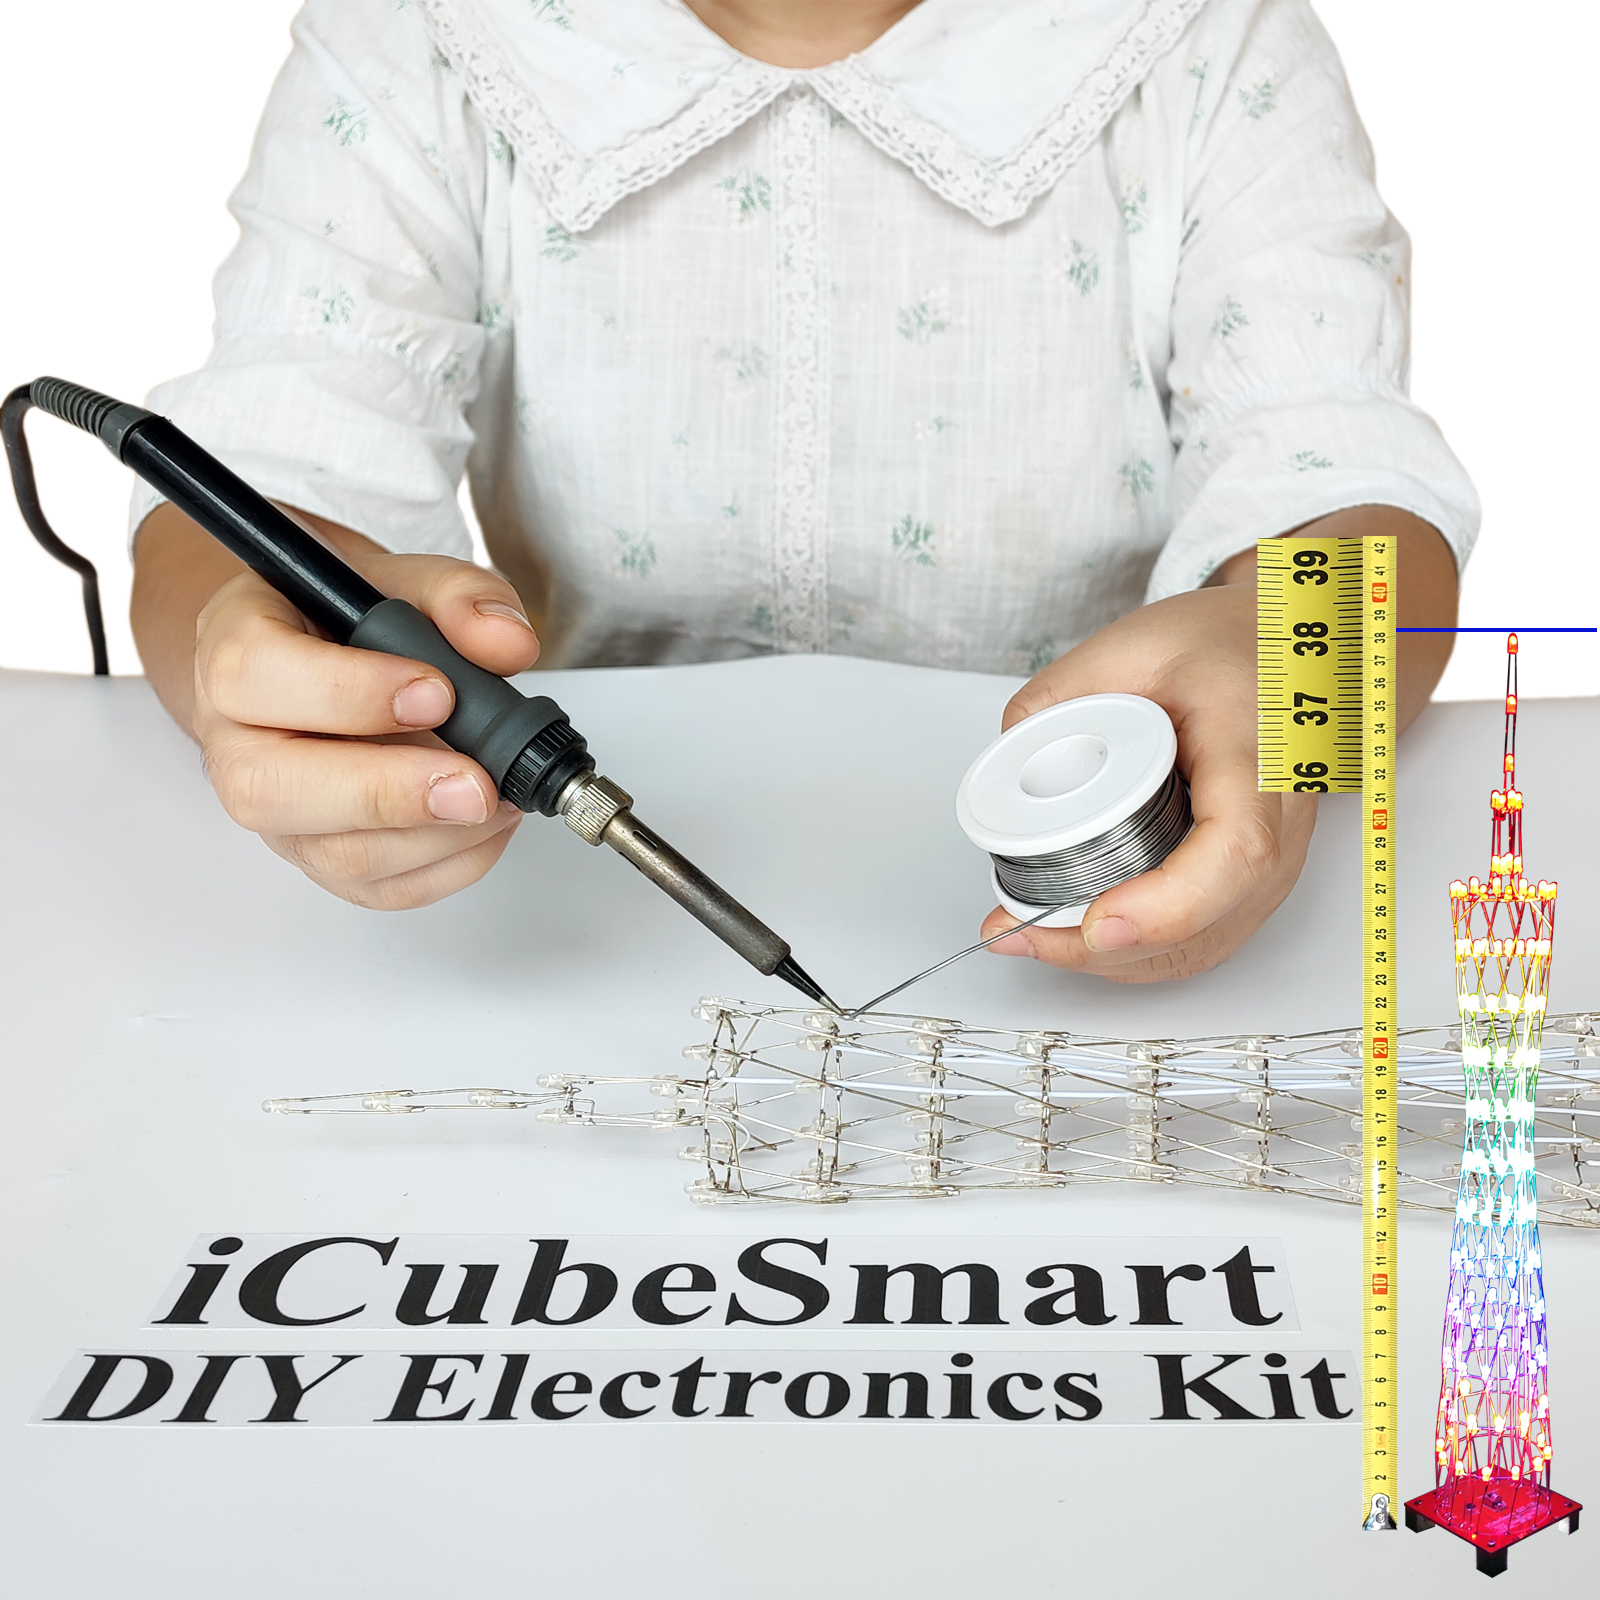 iCubeSmart Led Canton Tower Model DIY Electronic Kit, LED Handmade Soldering Project Kit, 12 LED Circles, Height 0.38 Meter.